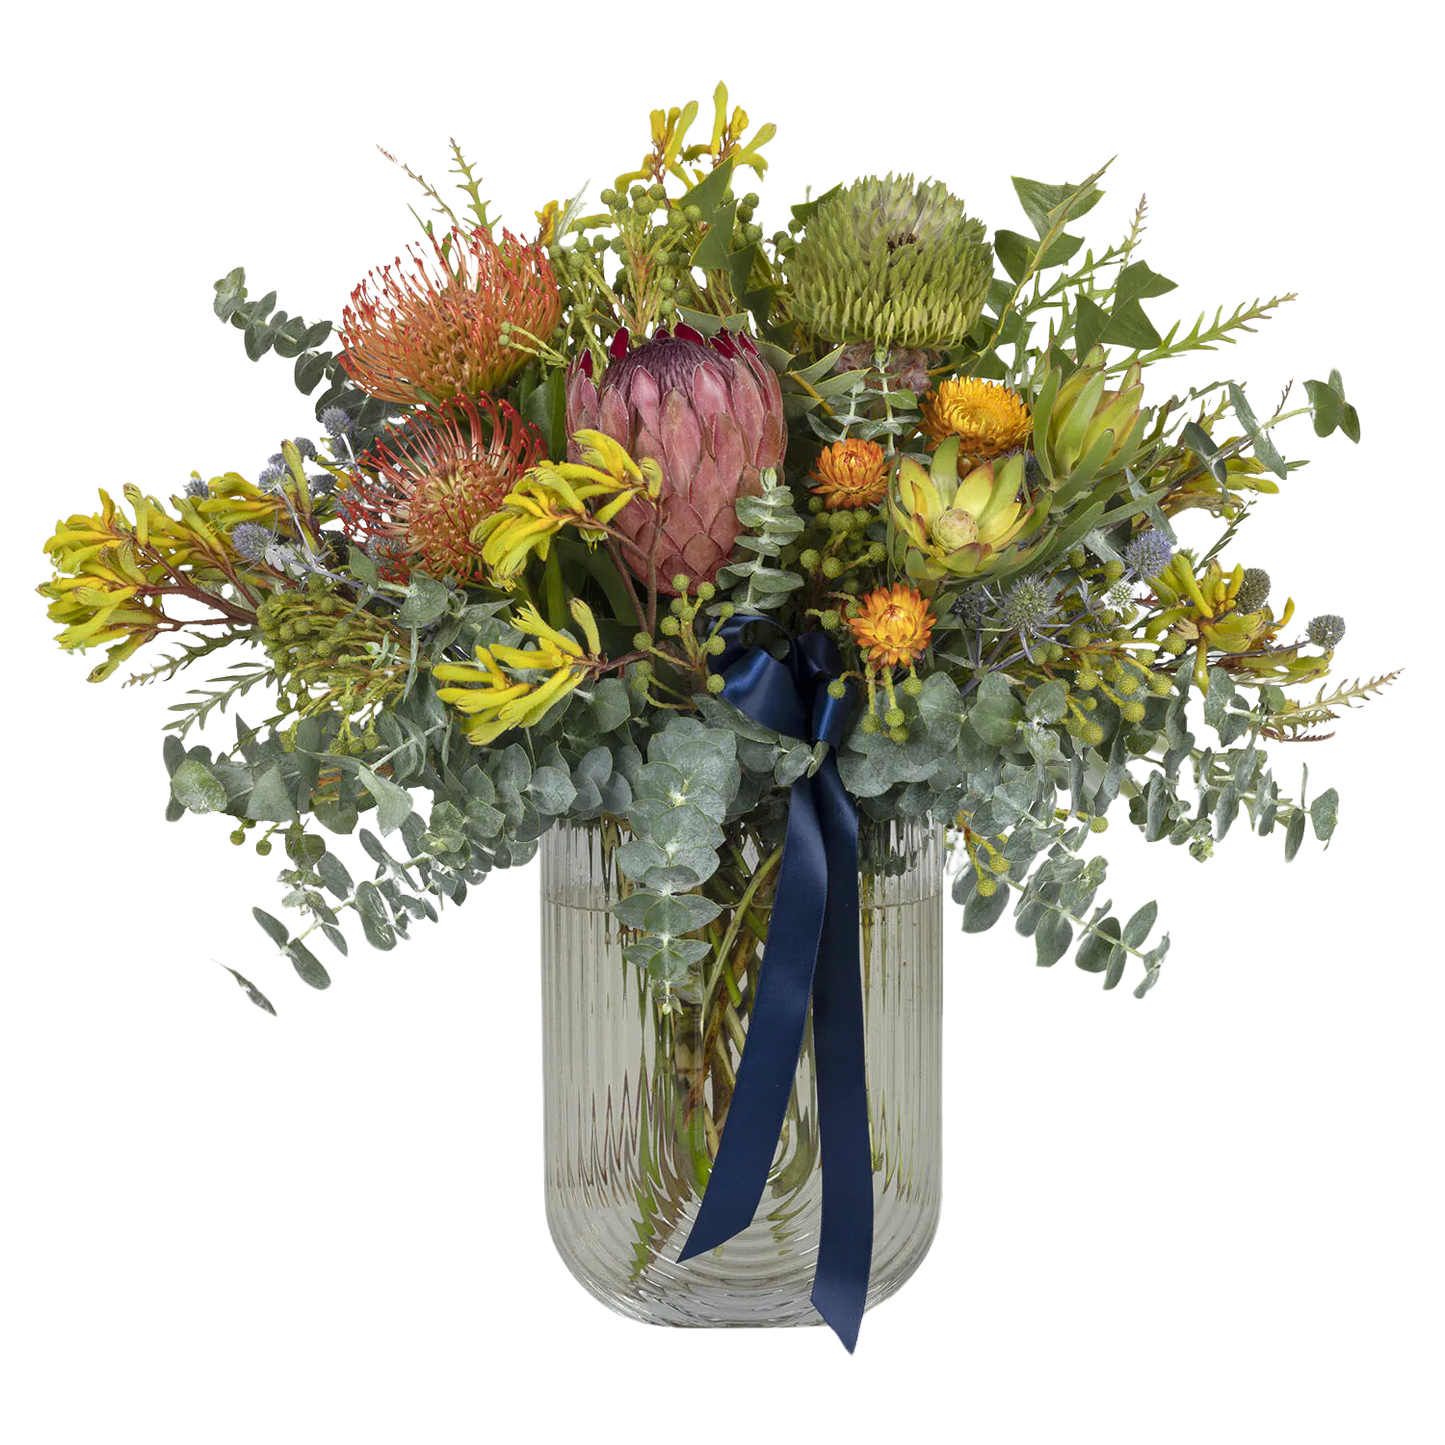 Native Flower Bouquet in a Vase